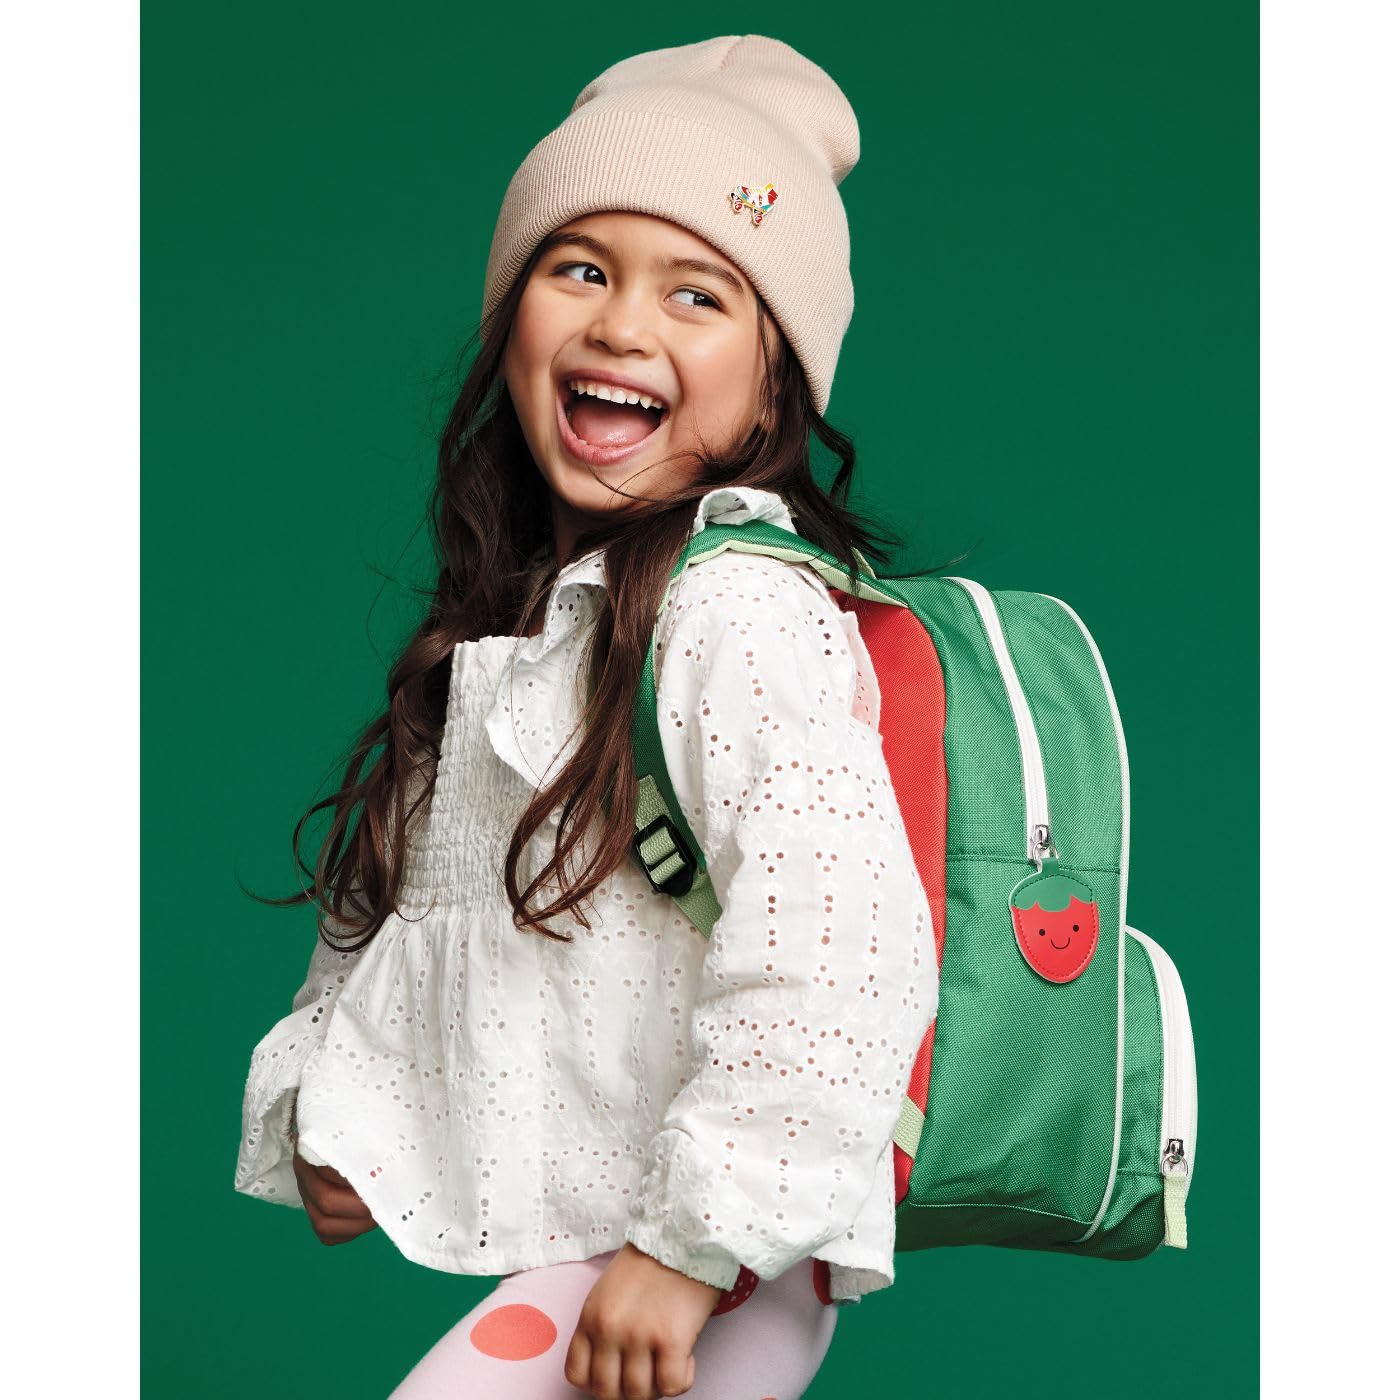 Skip Hop Sparks Little Kid's Backpack, Preschool Ages 3-4, Strawberry